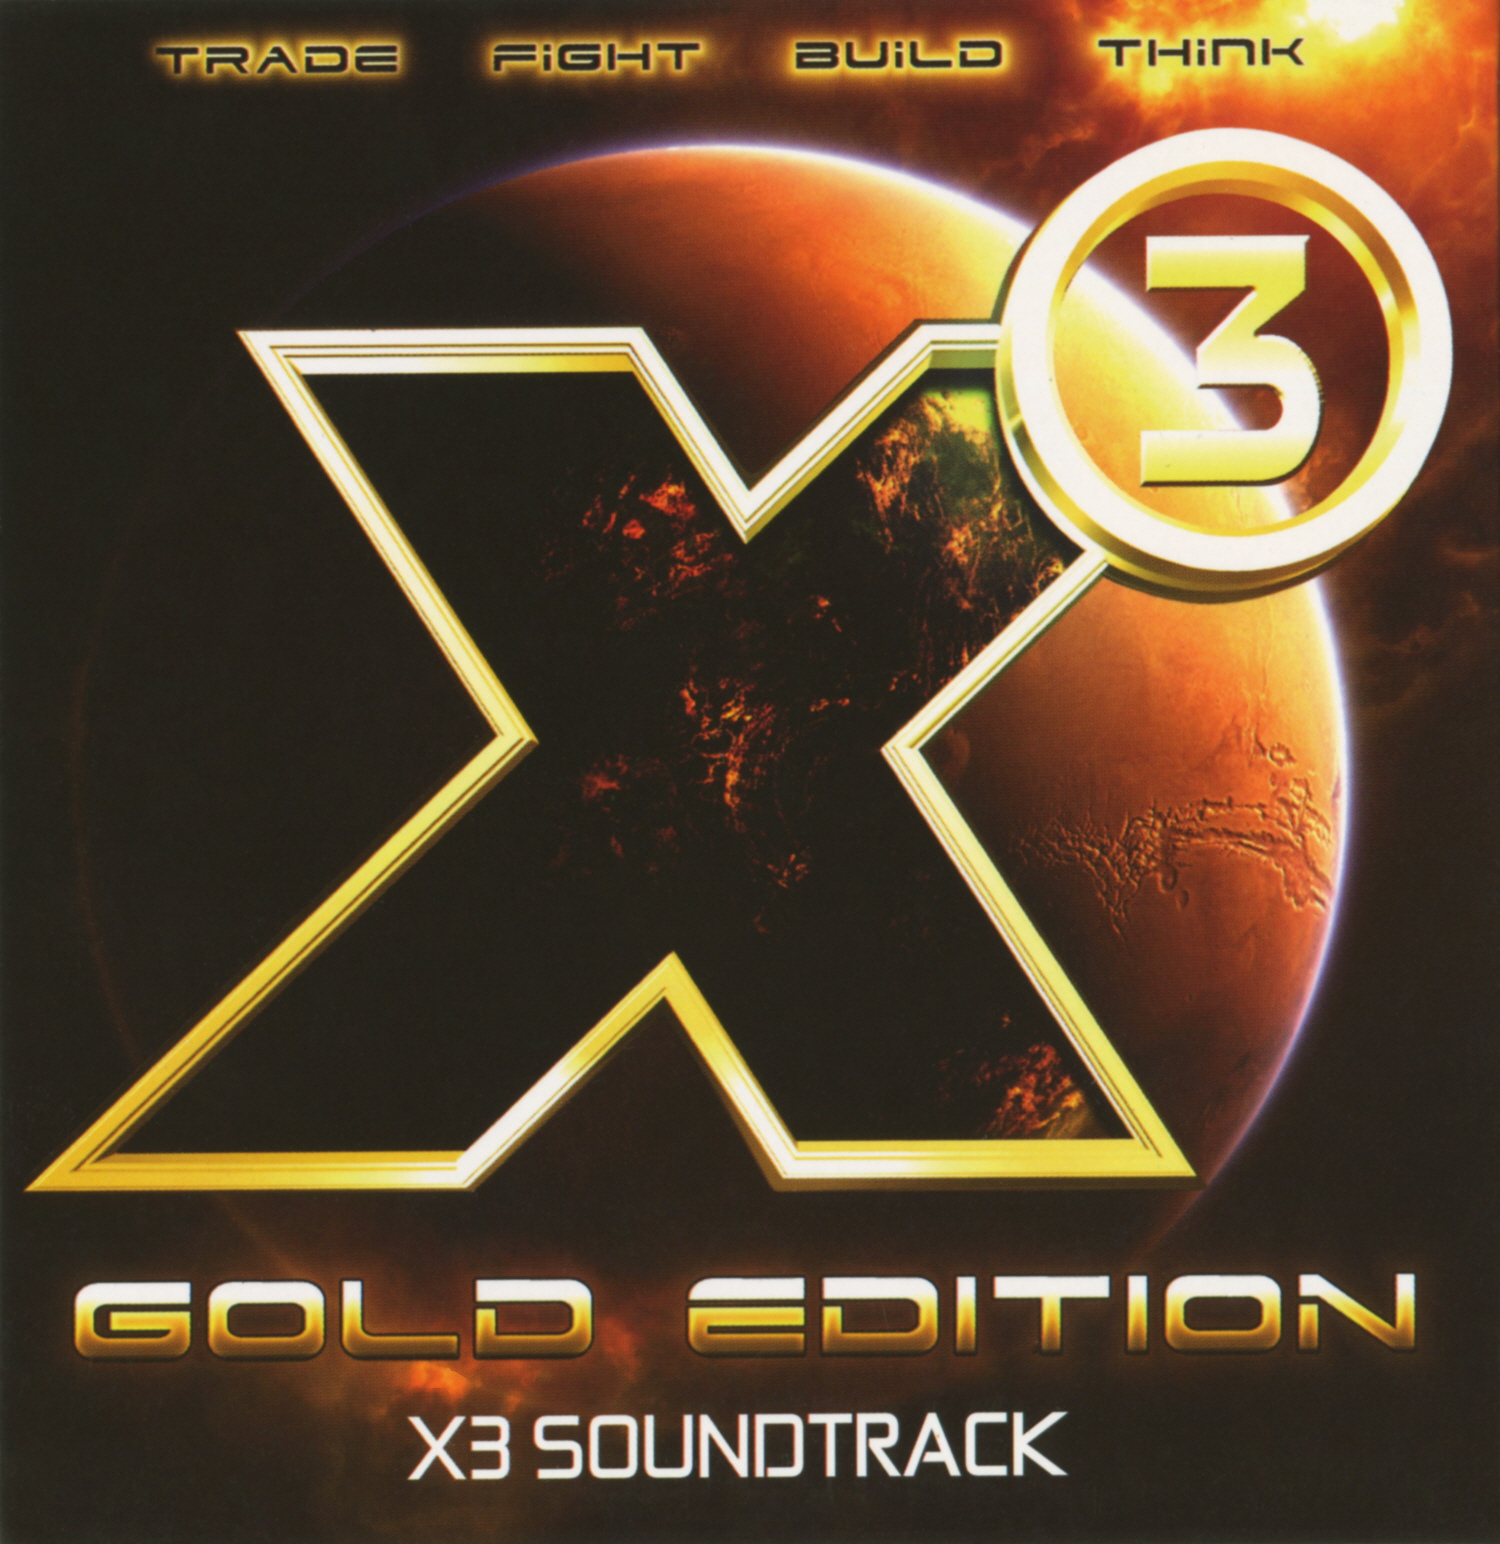 X3 Gold Edition. Обложка релиза. ТВС 4 золотое издание. Трек Gold 2008.